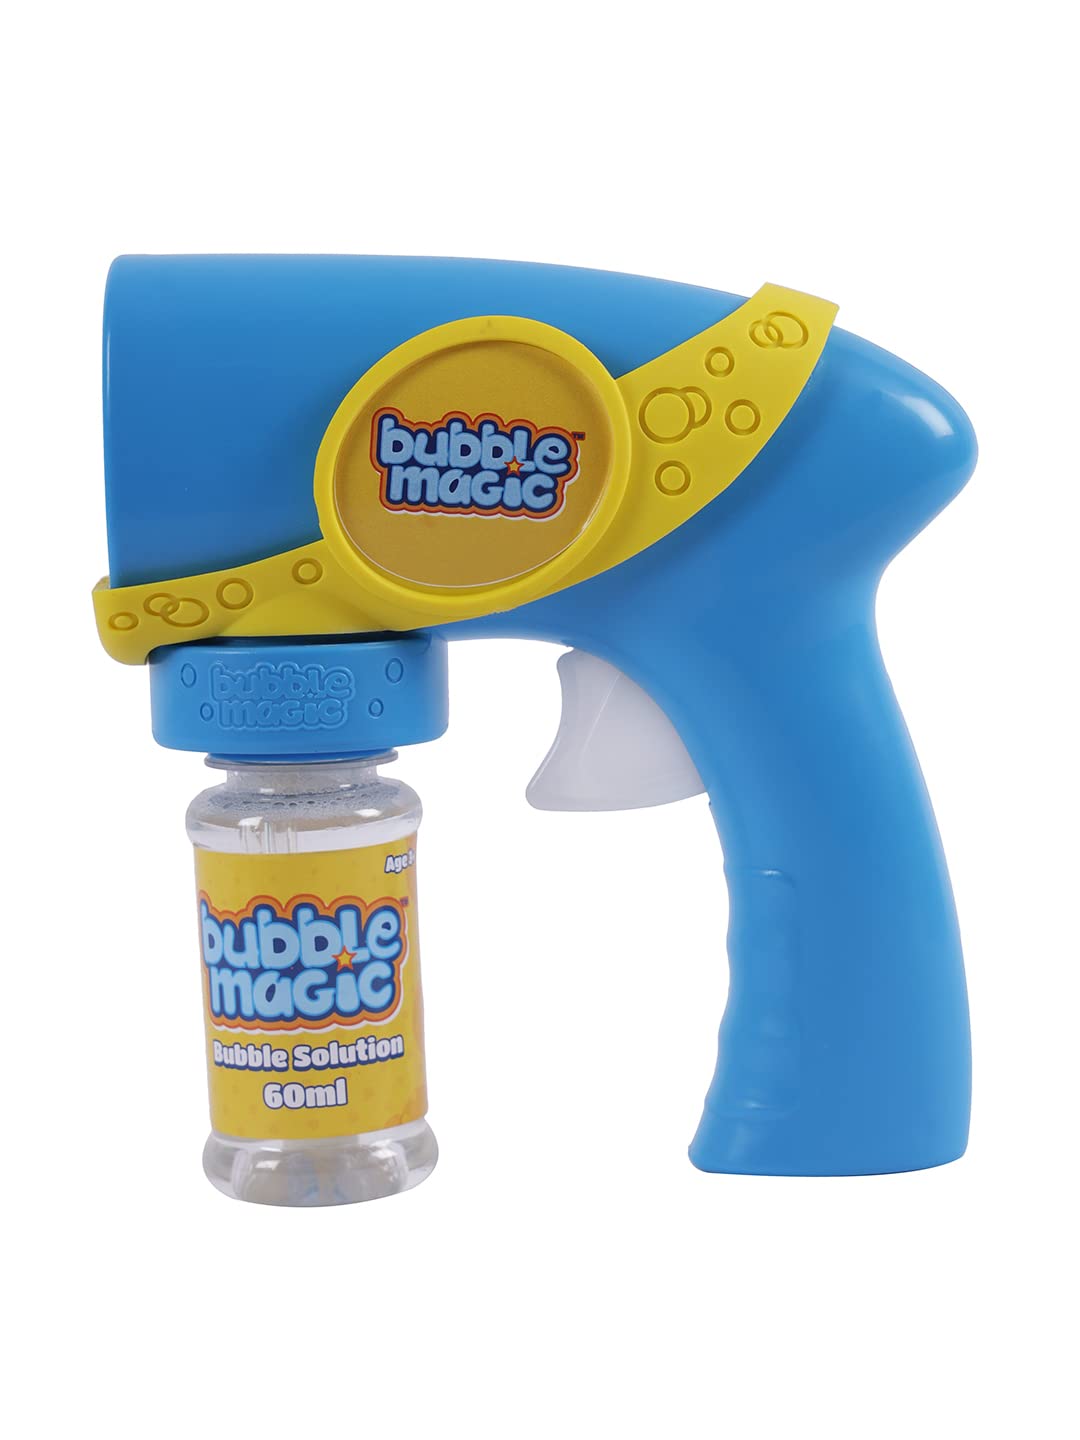 Bubble Magic Turbo Powered Bubble Blaster Includes Bubble Solution Bottle